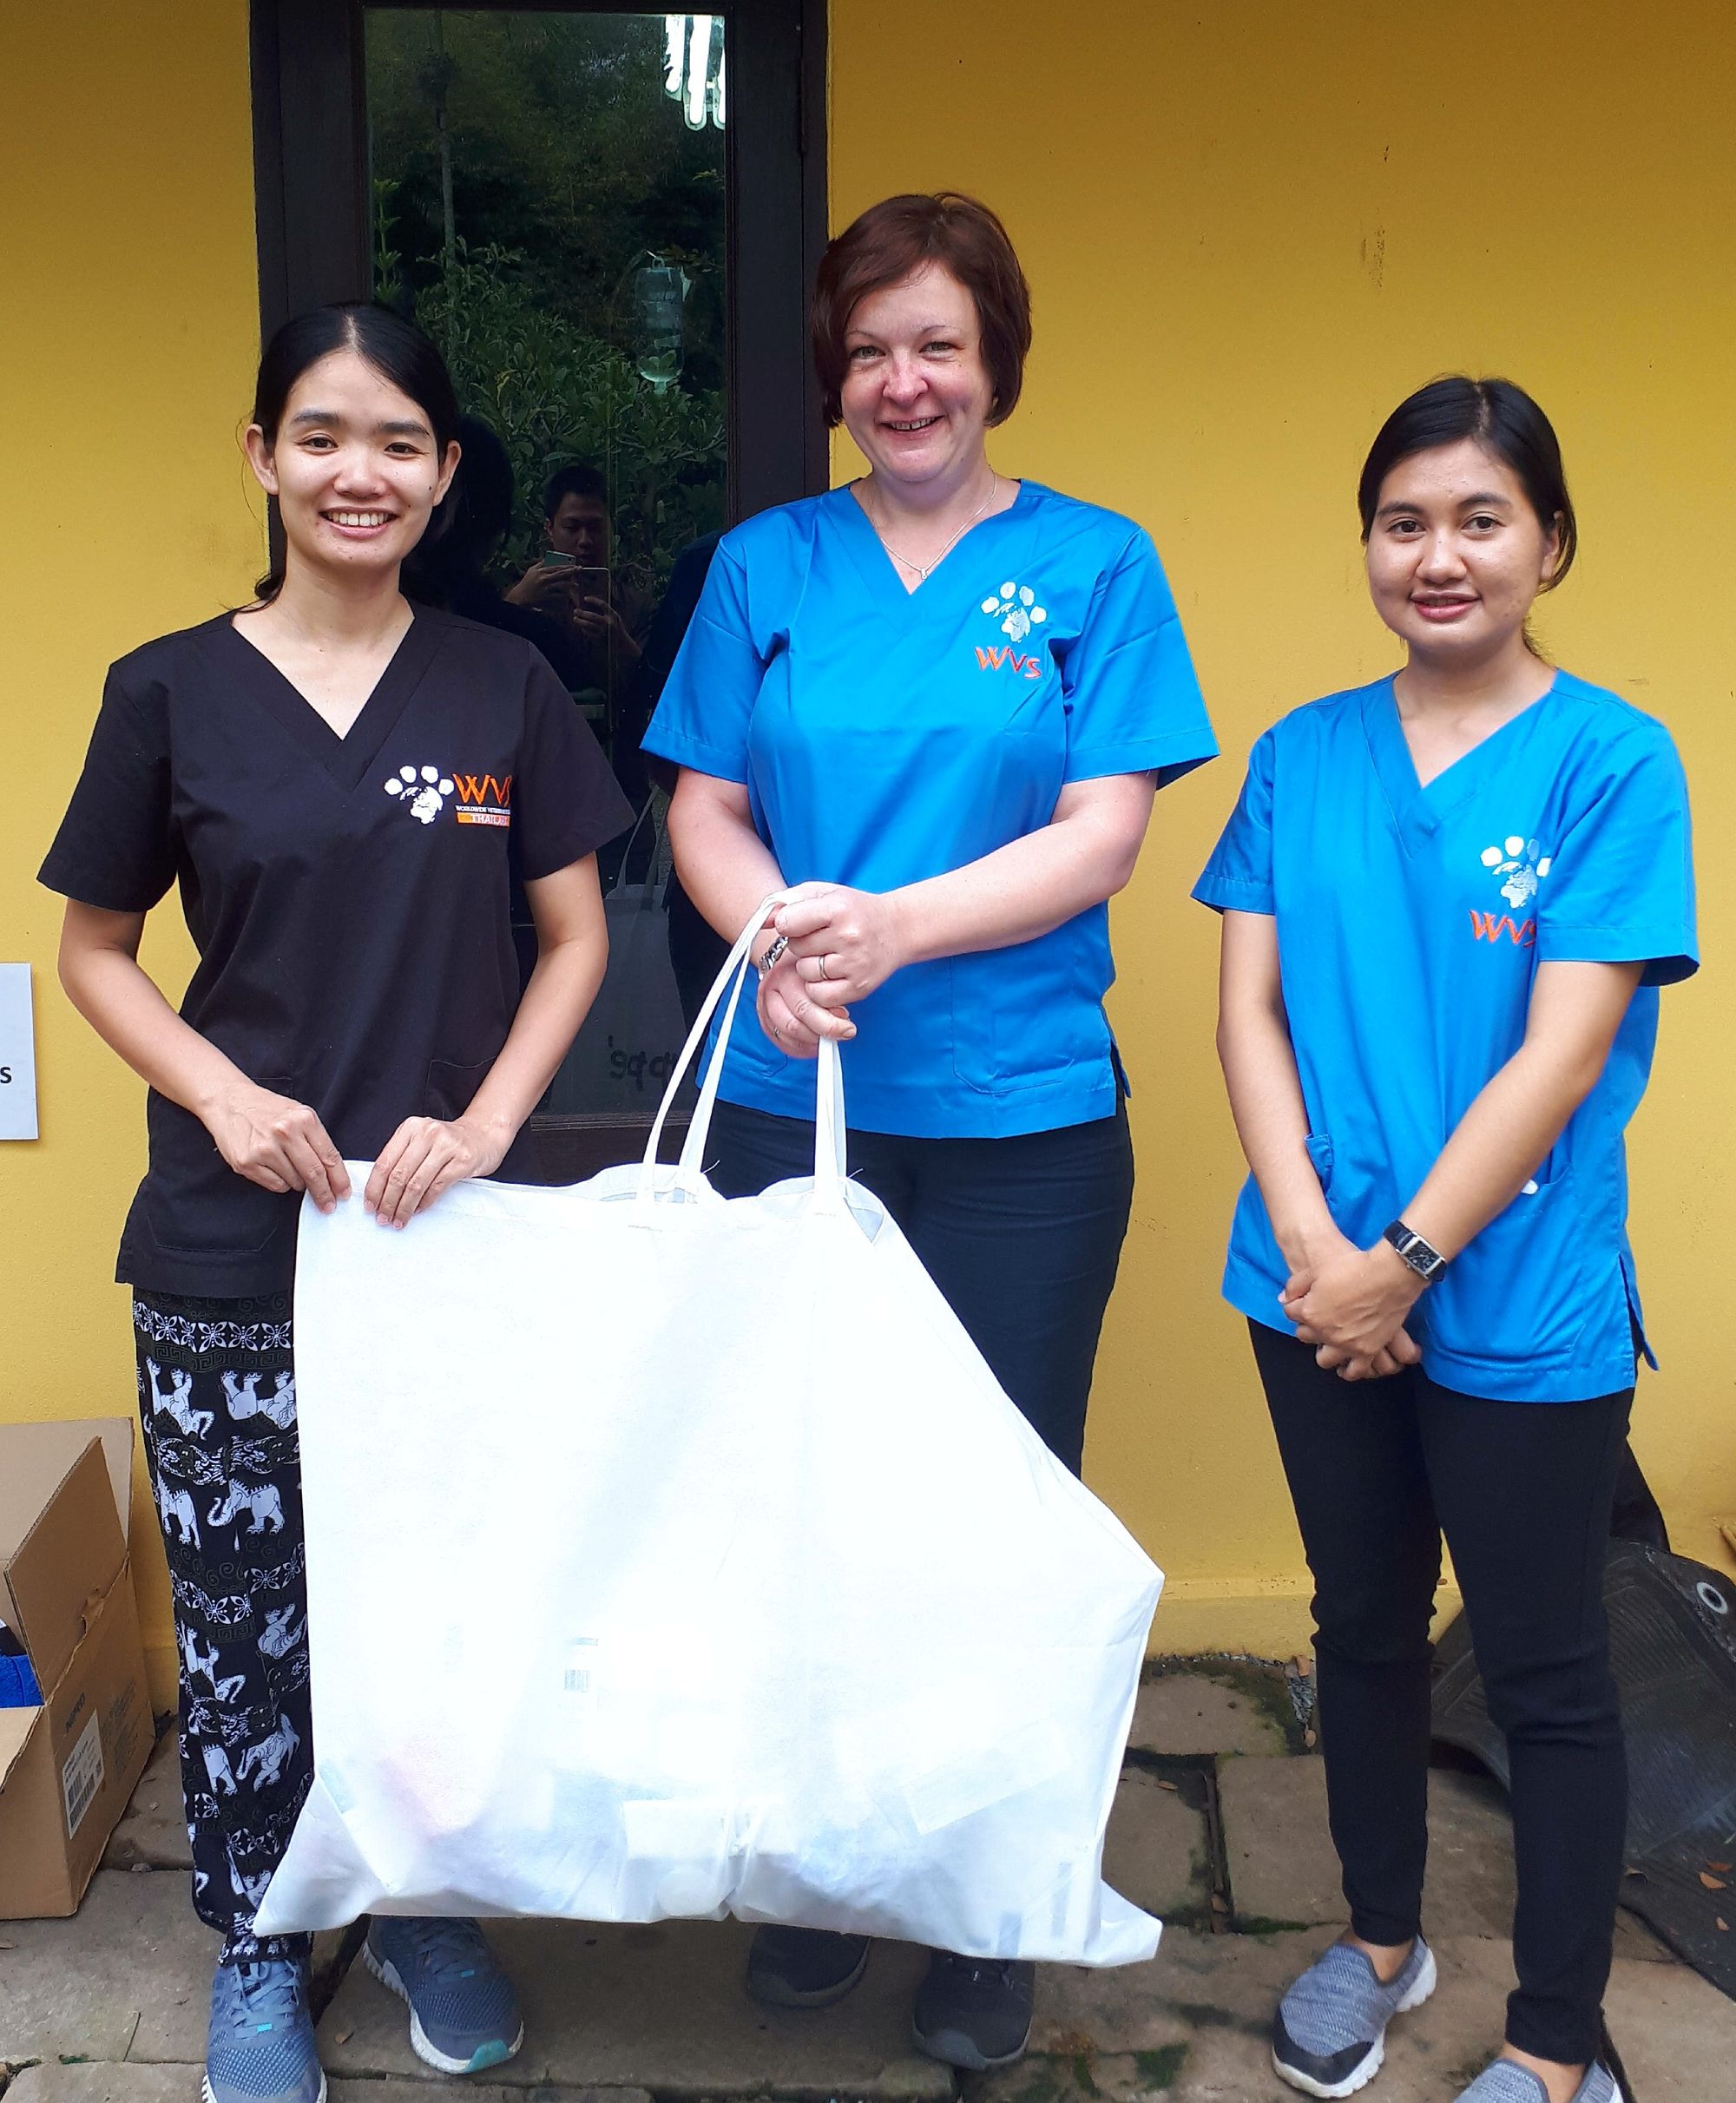 “What a week!” - Life as a Centaur sponsored Vet Nurse at ITC Thailand